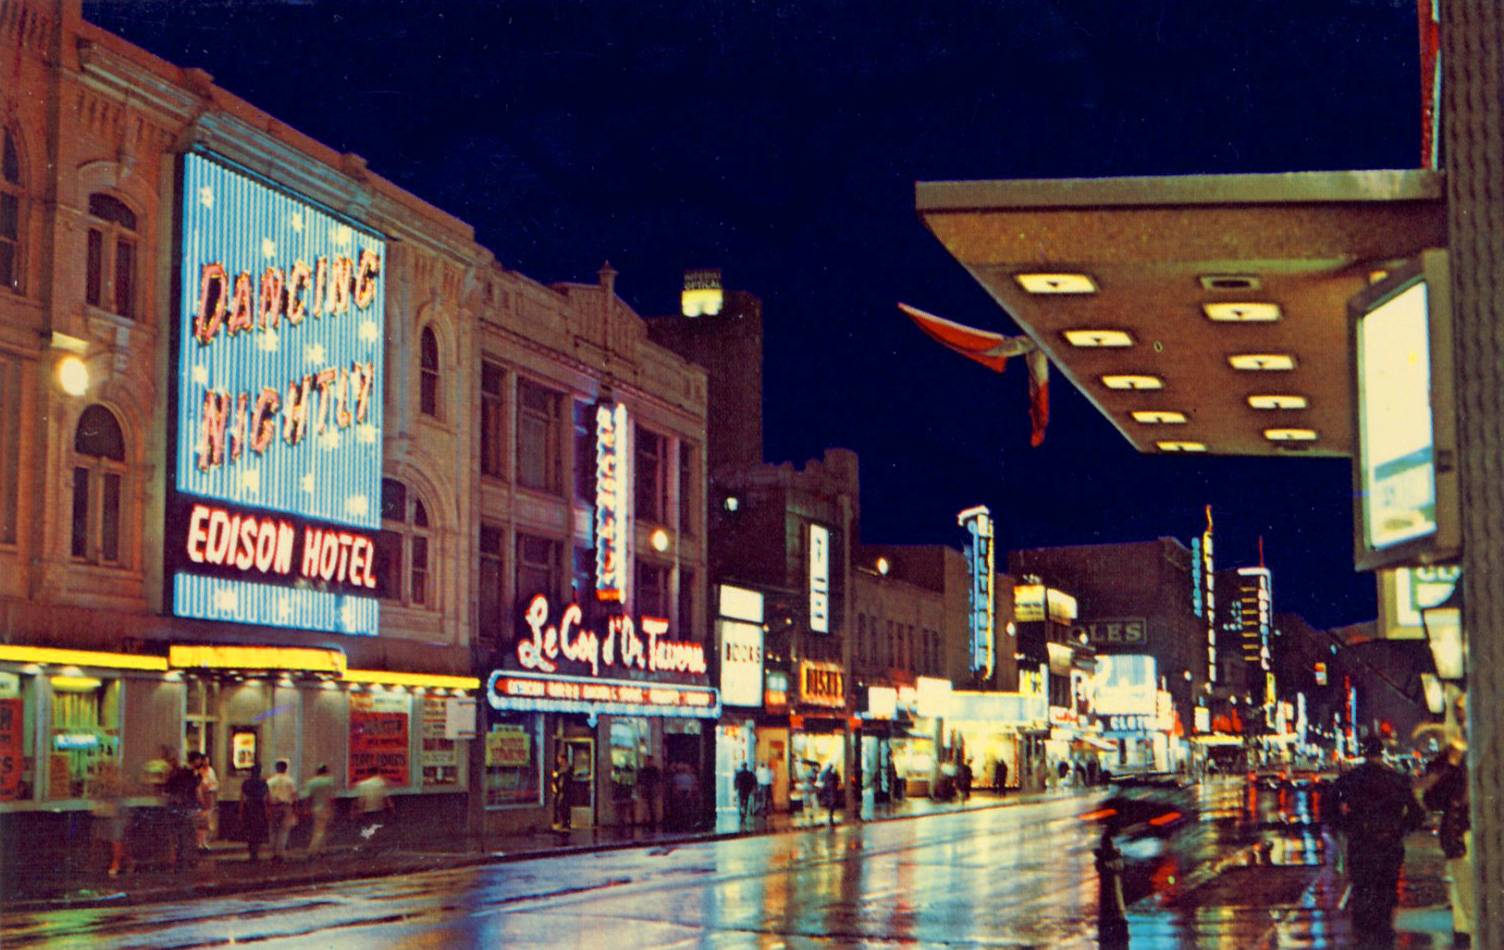 postcard-toronto-yonge-street-night-looking-s-across-from-edison-hotel-many-signs-1960s.jpg